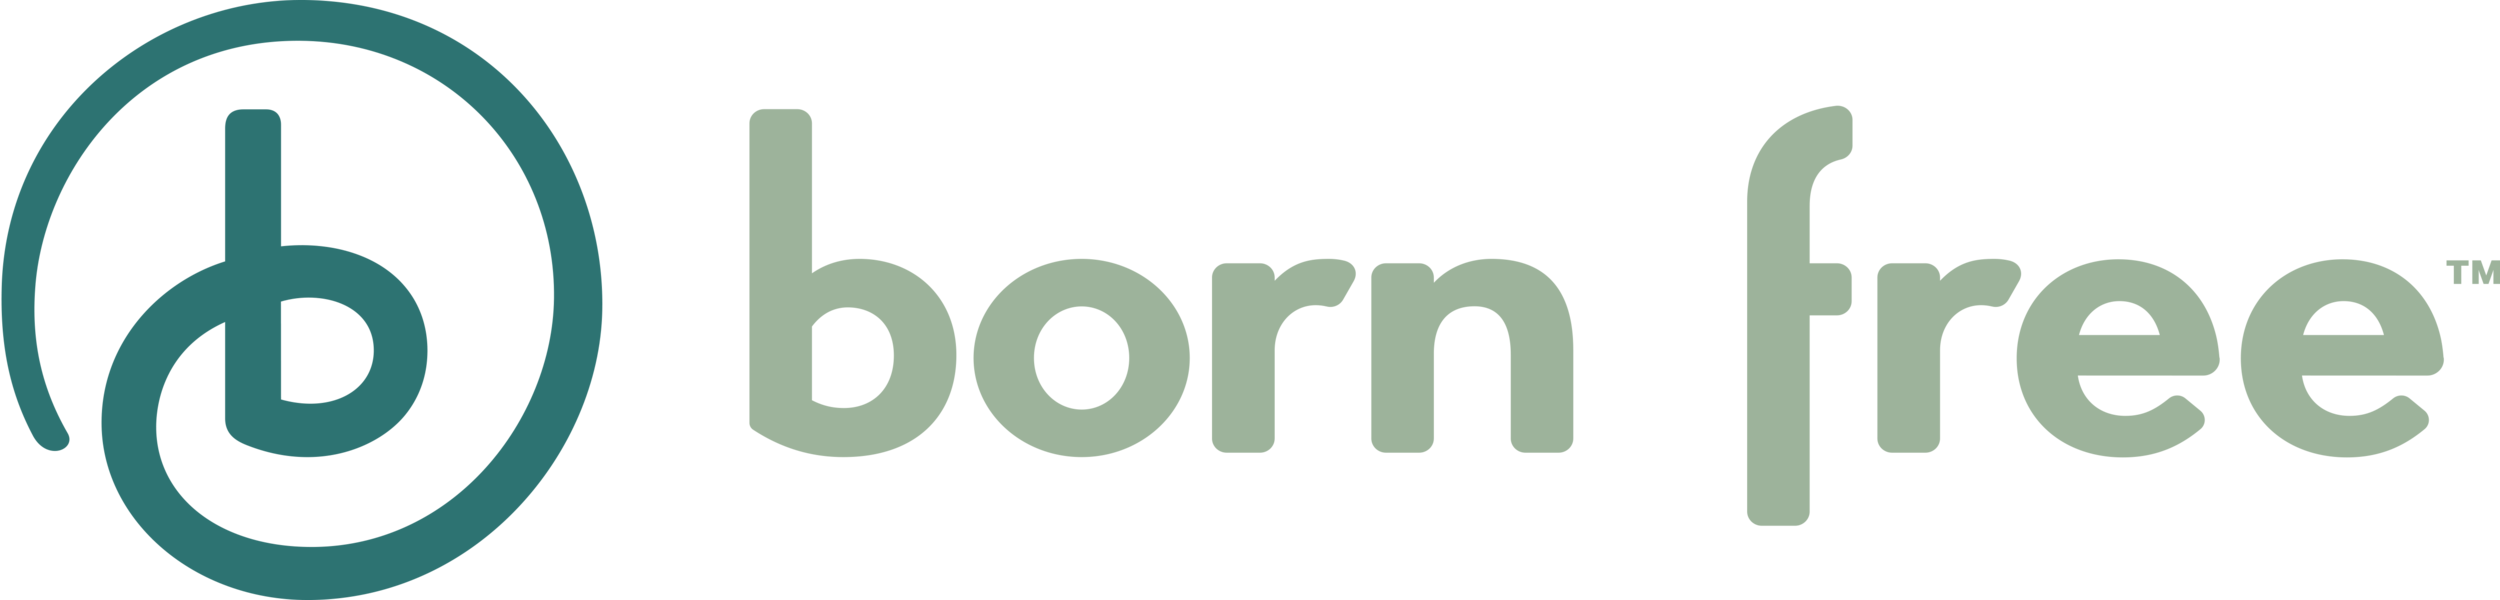 SUMR Brands_bornfree Logo_temp.png